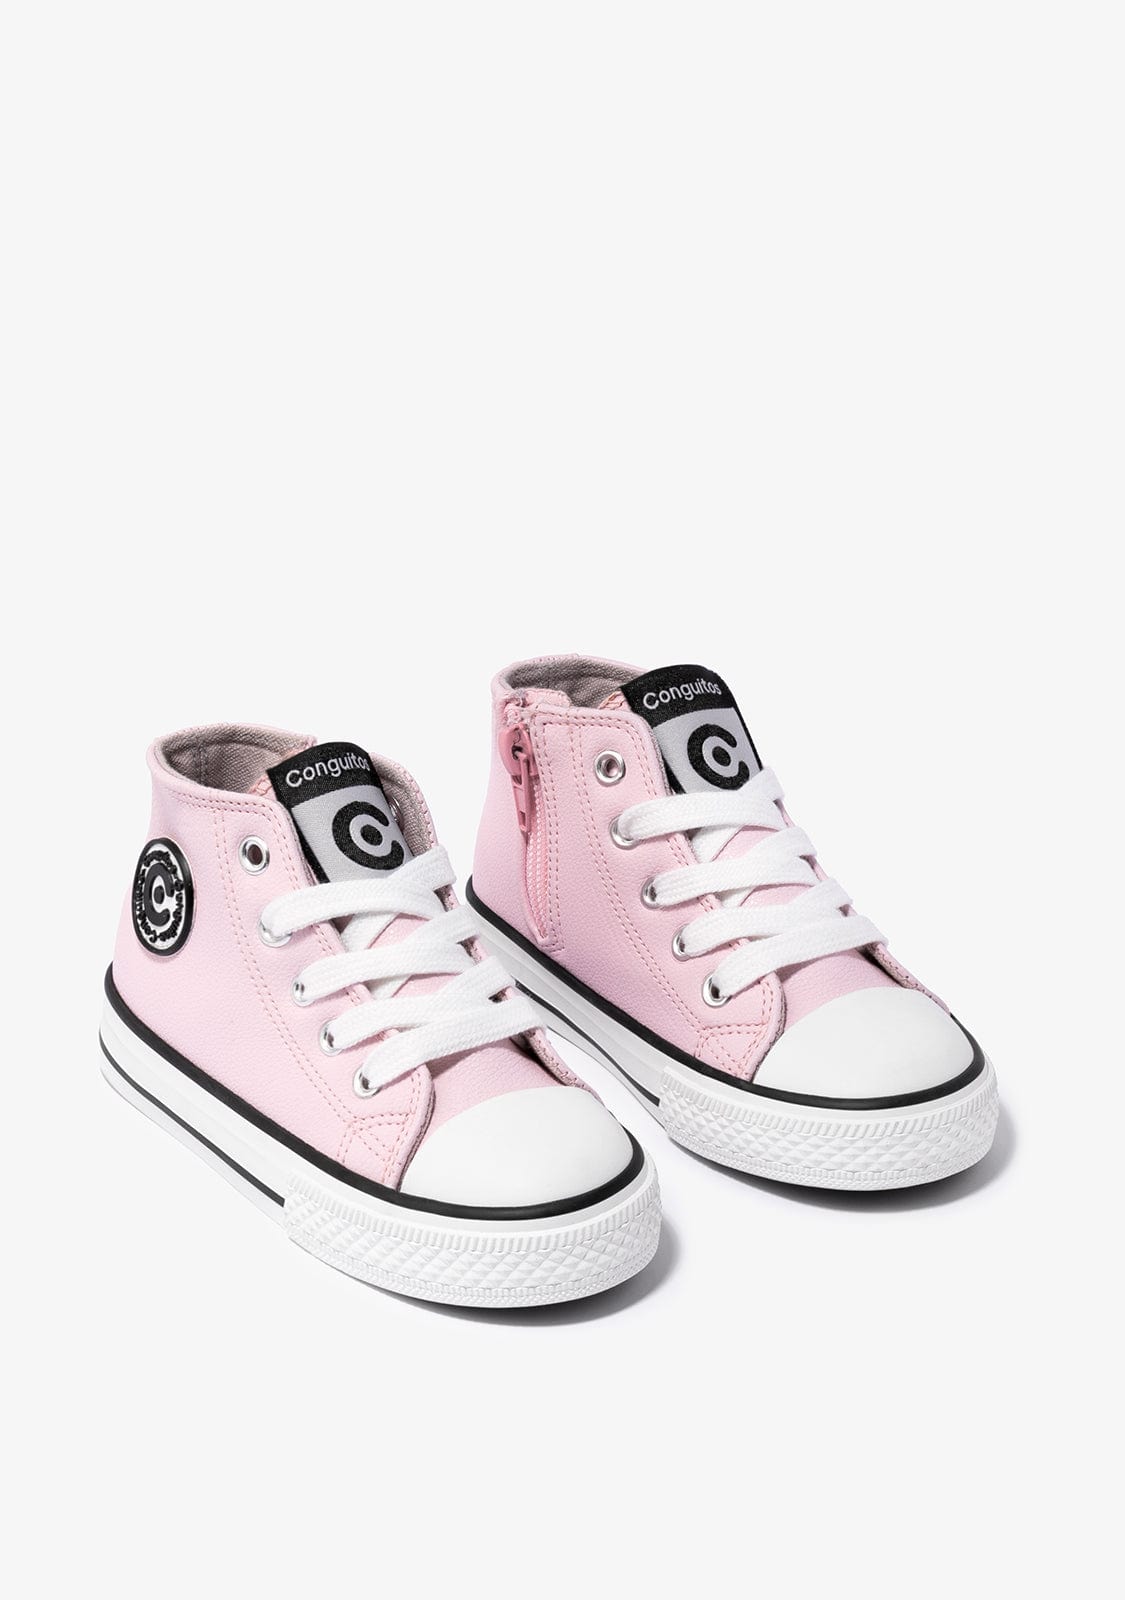 CONGUITOS Shoes Girl's Pink Logo Hi-Top Sneakers Napa